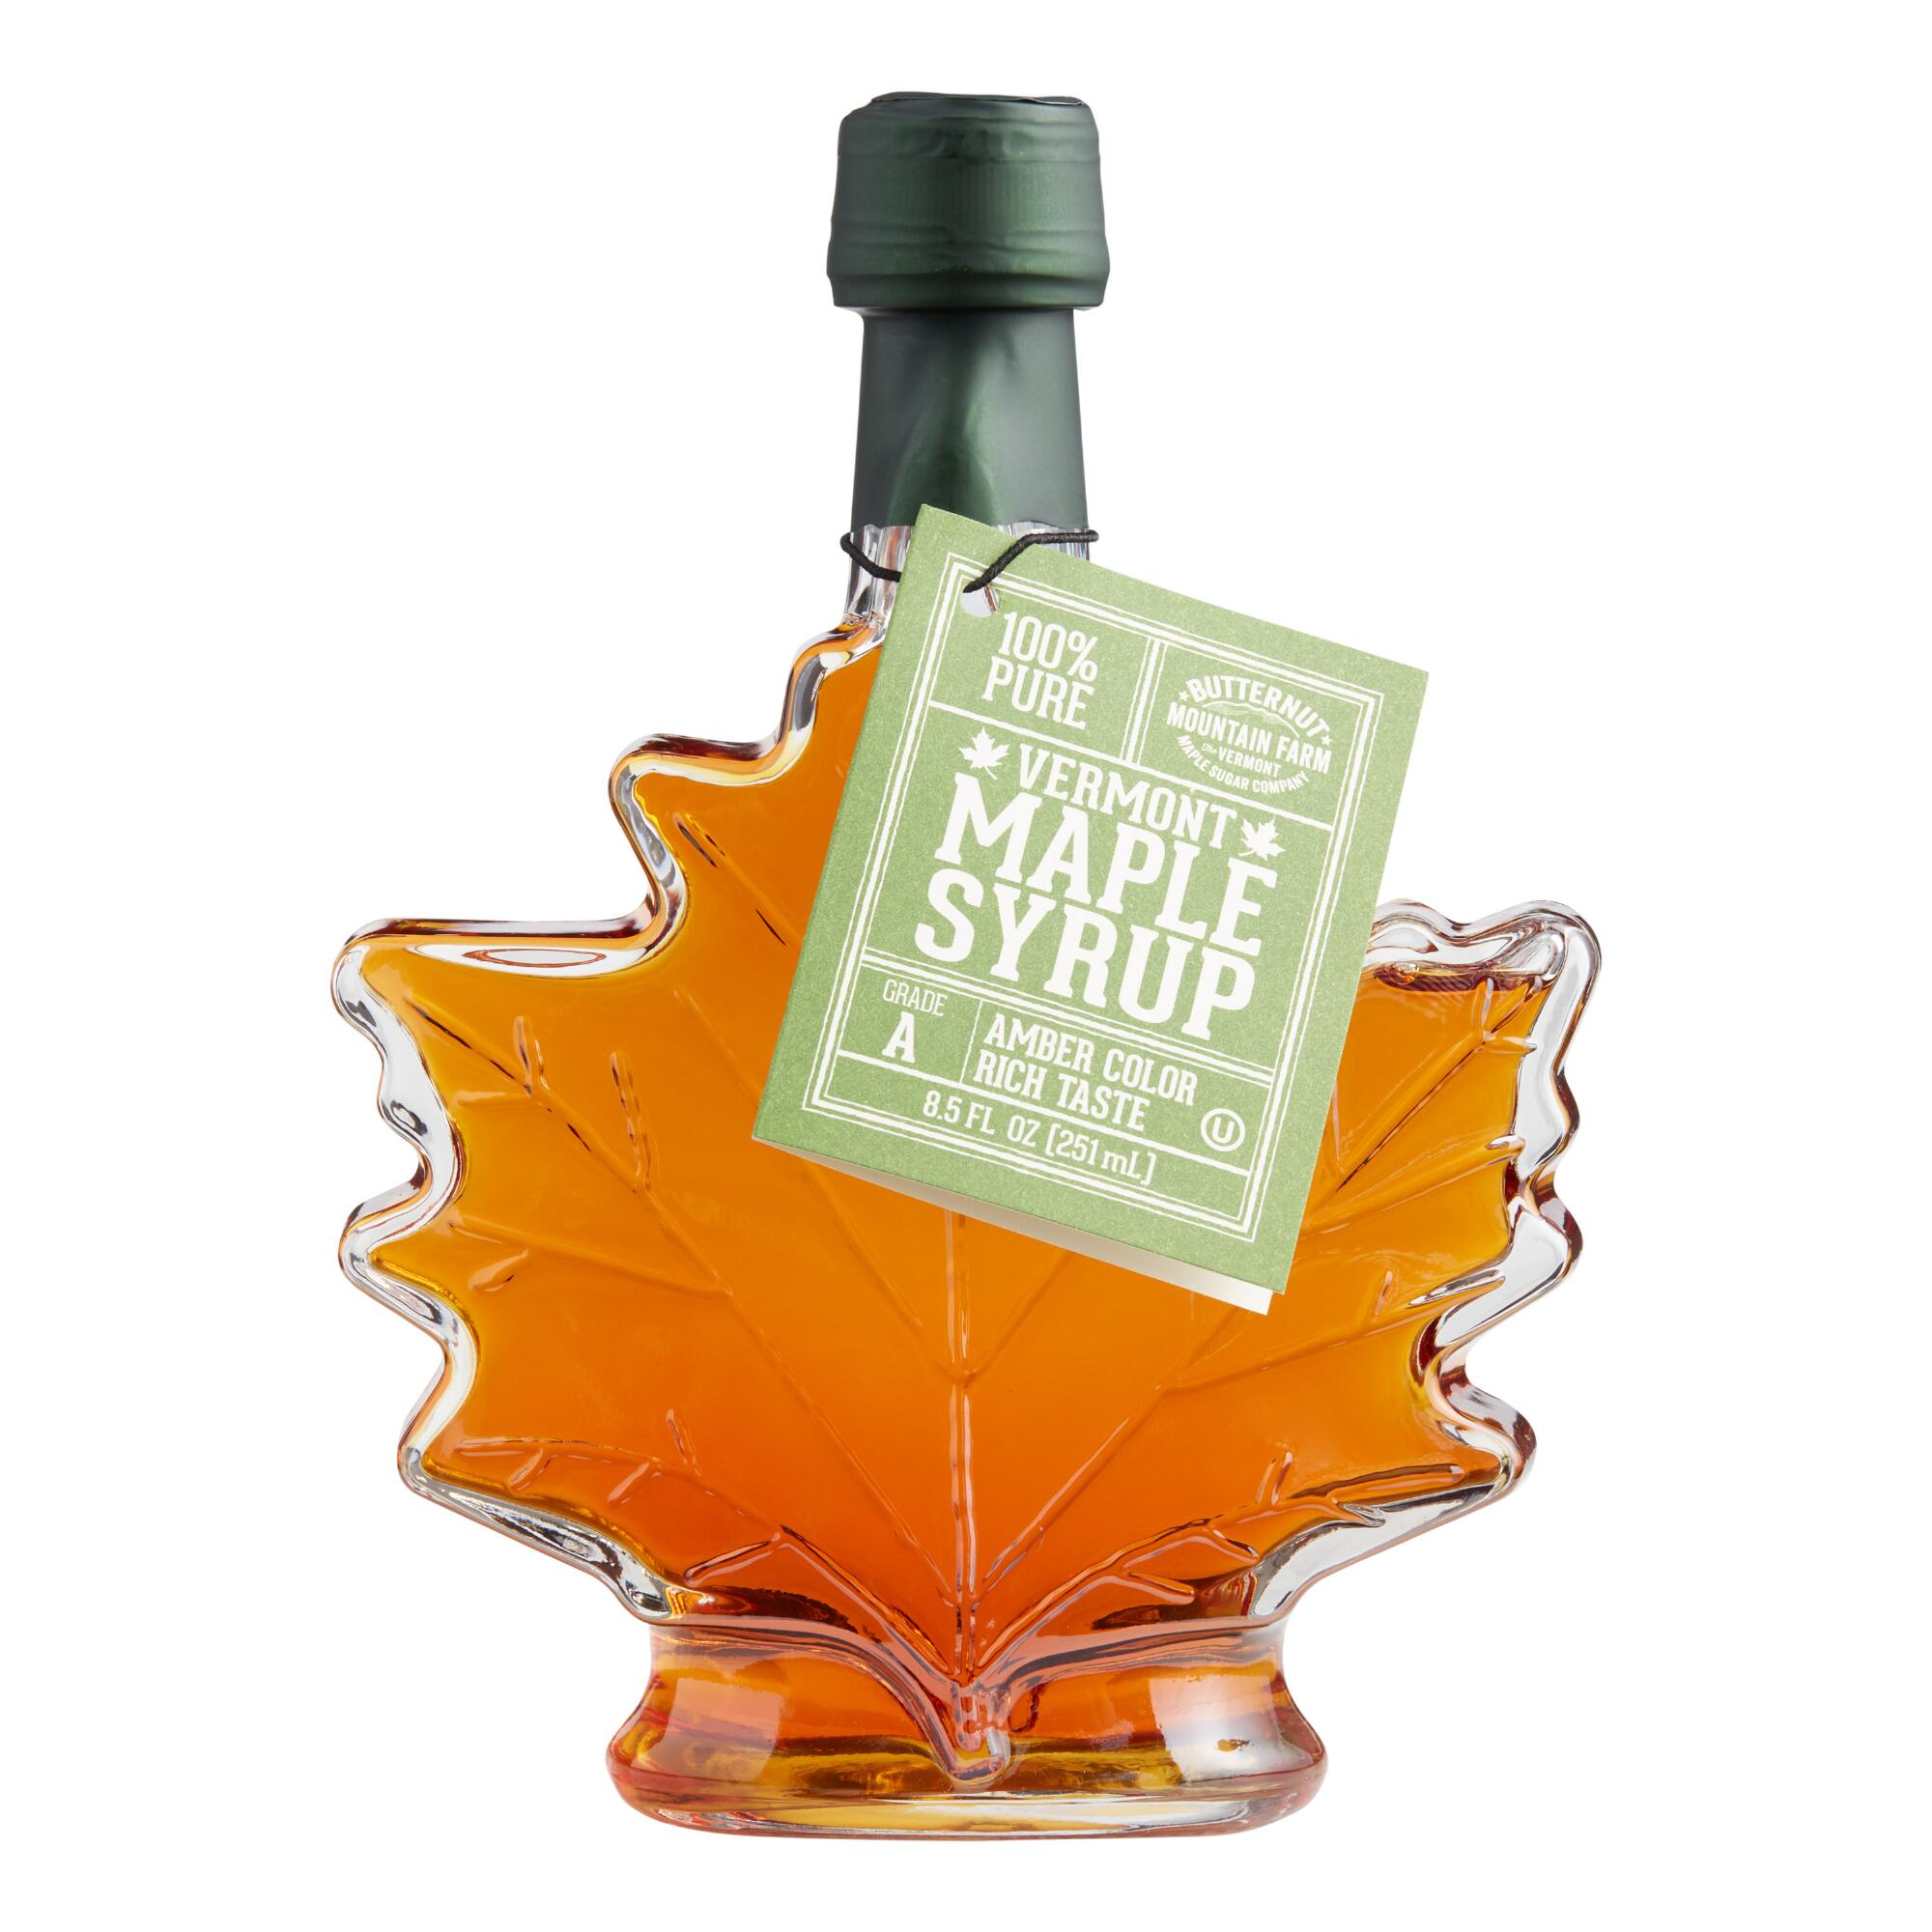 Butternut Mountain Farm Maple Leaf Syrup by World Market